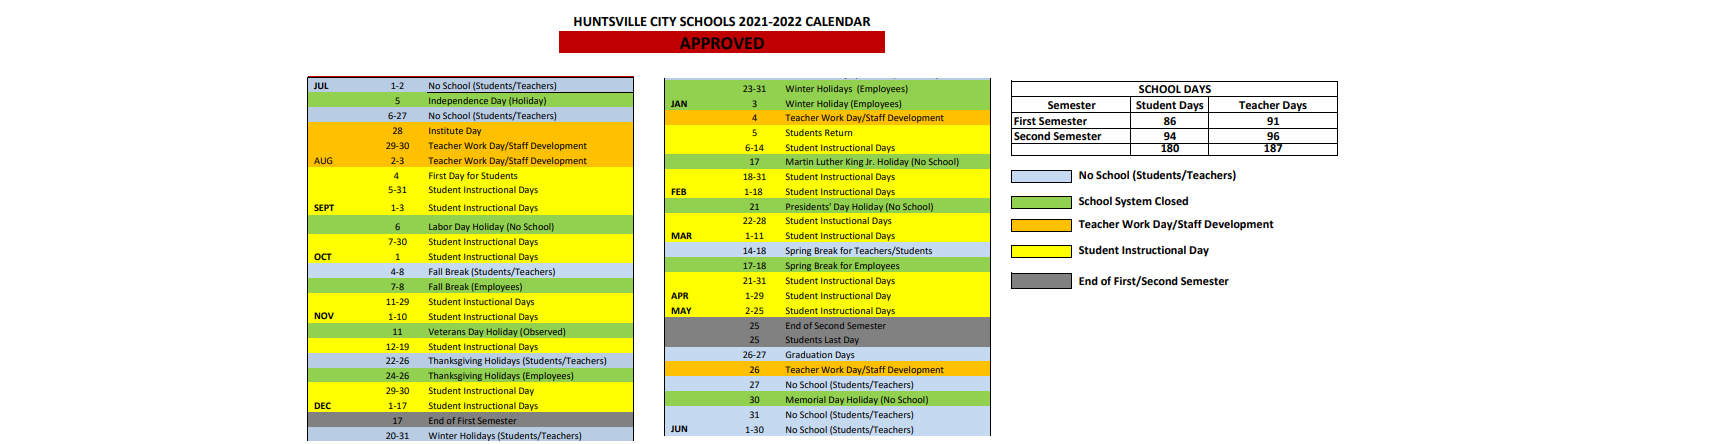 District School Academic Calendar Key for Whitesburg Middle School